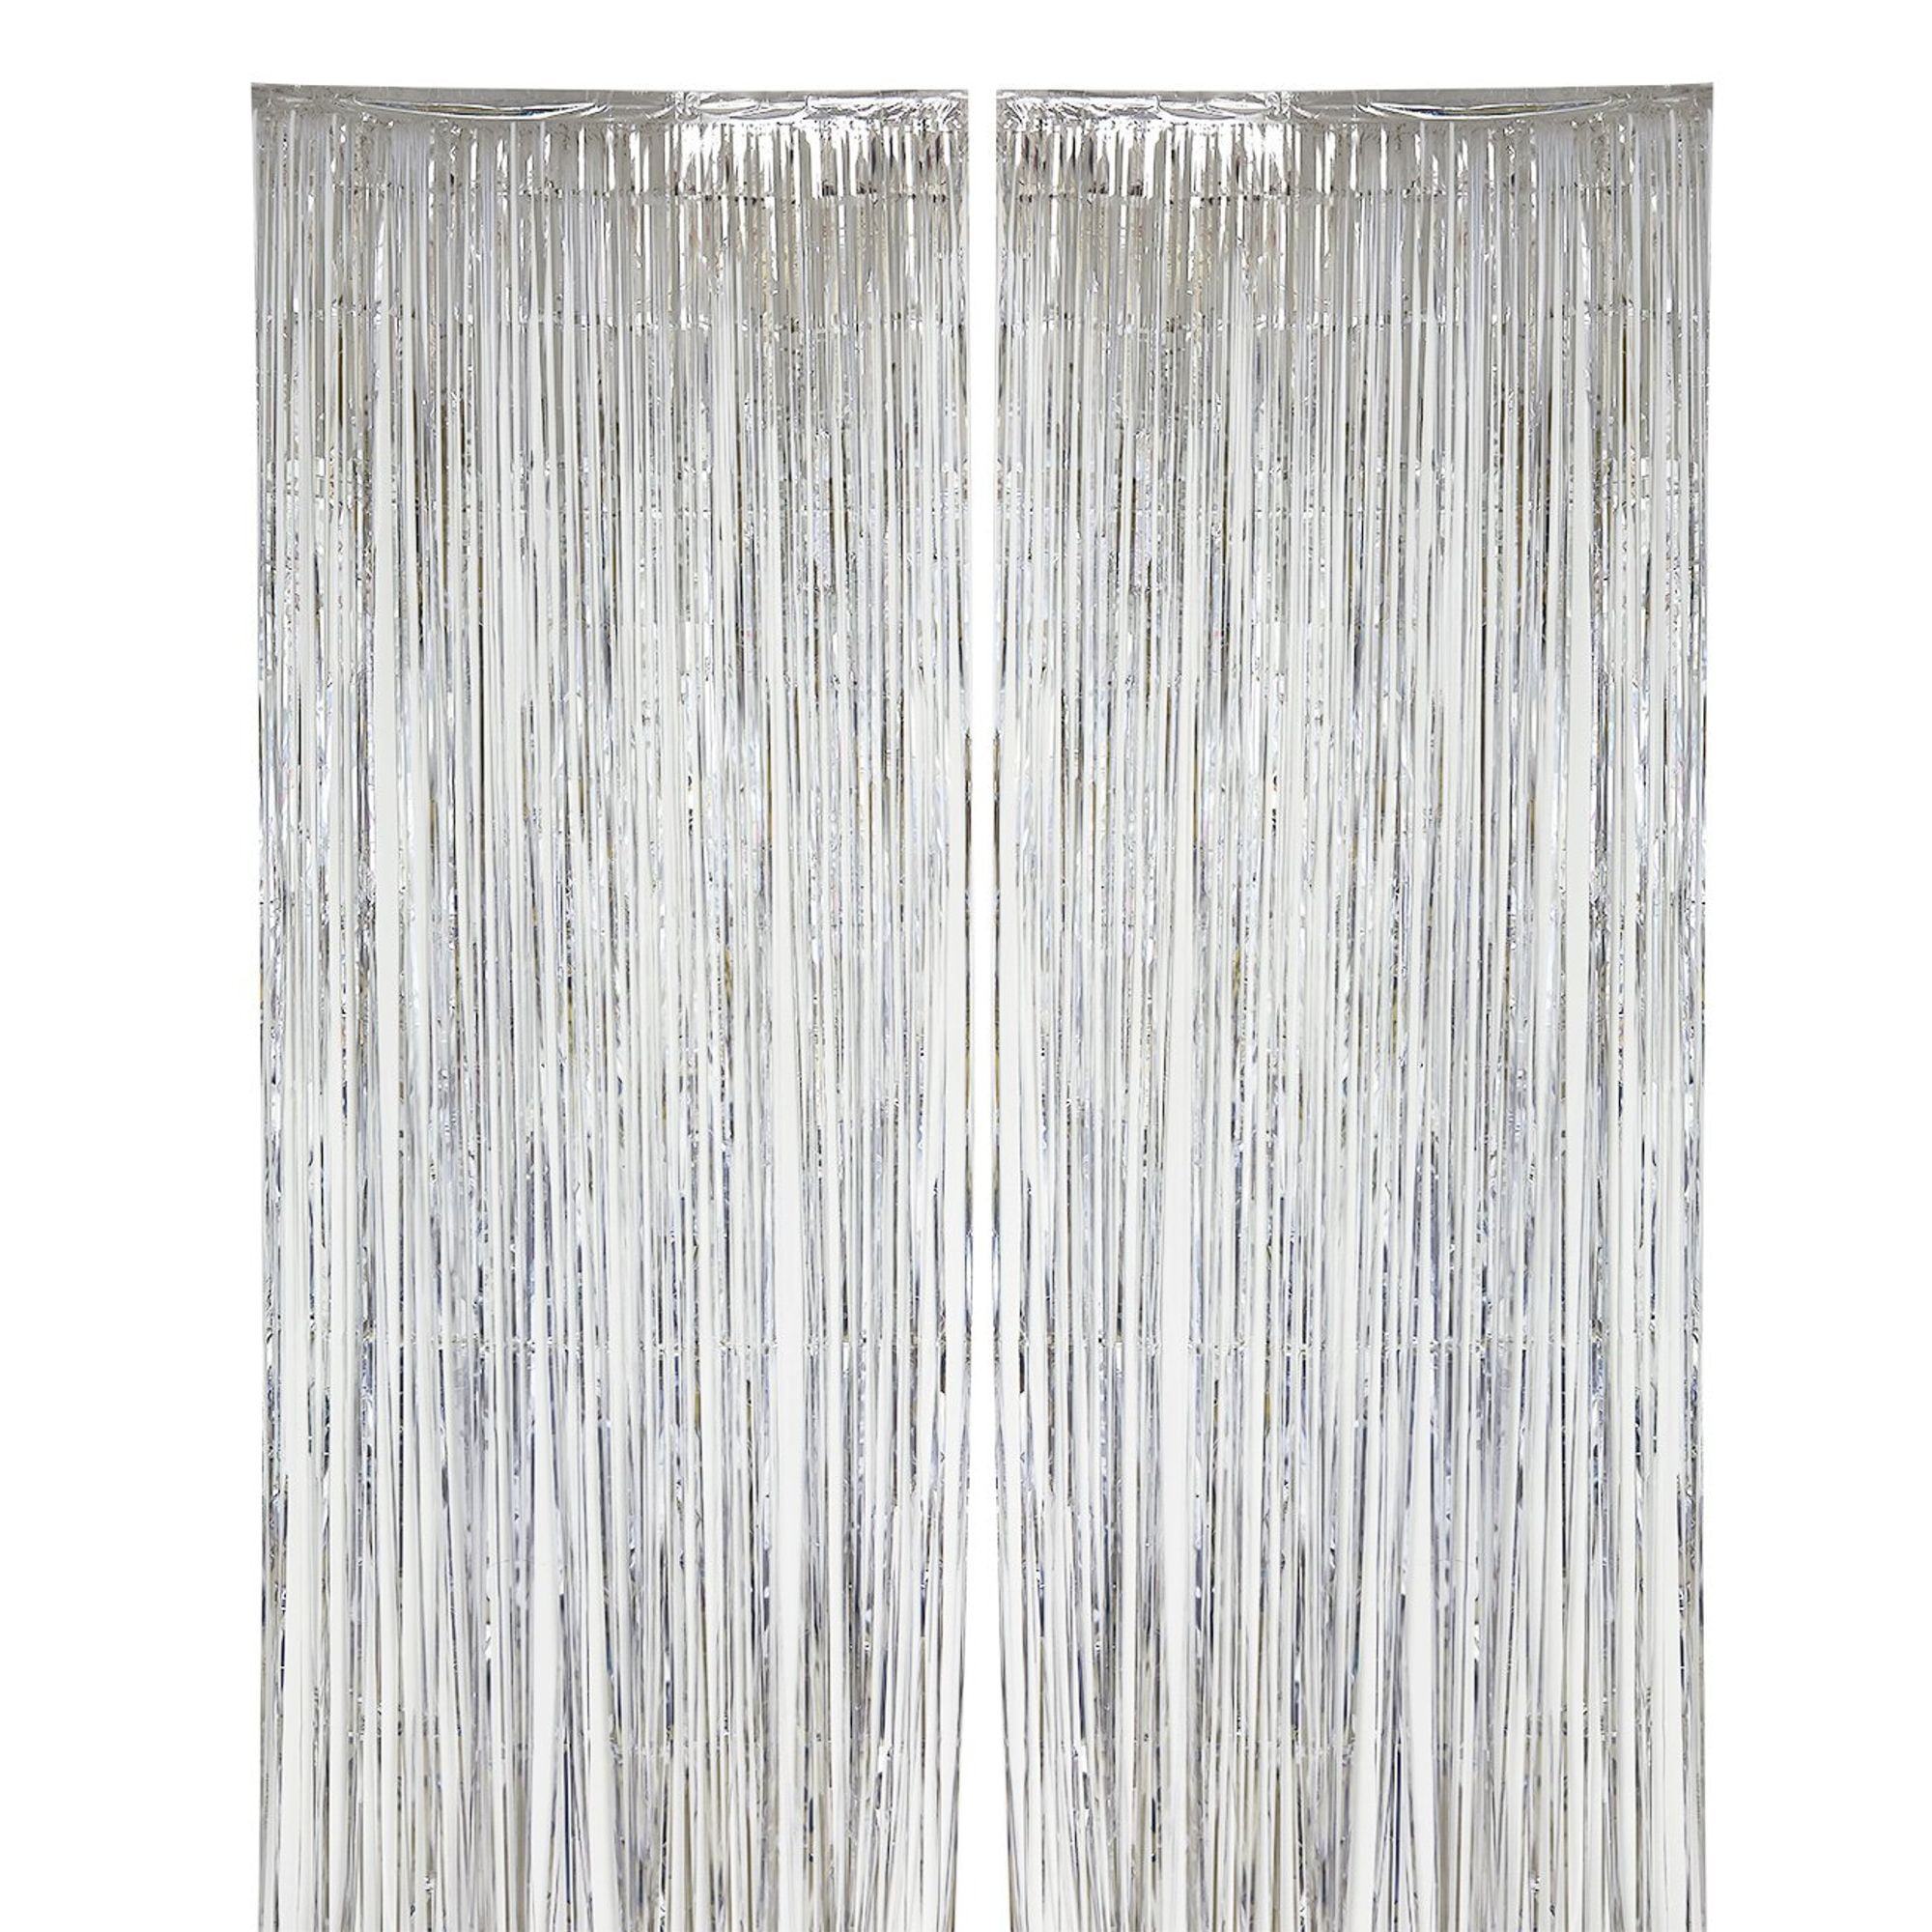 Silver Metallic Fringe Curtain Party Foil Tinsel Room Decor 3' x 8' Wholesale 